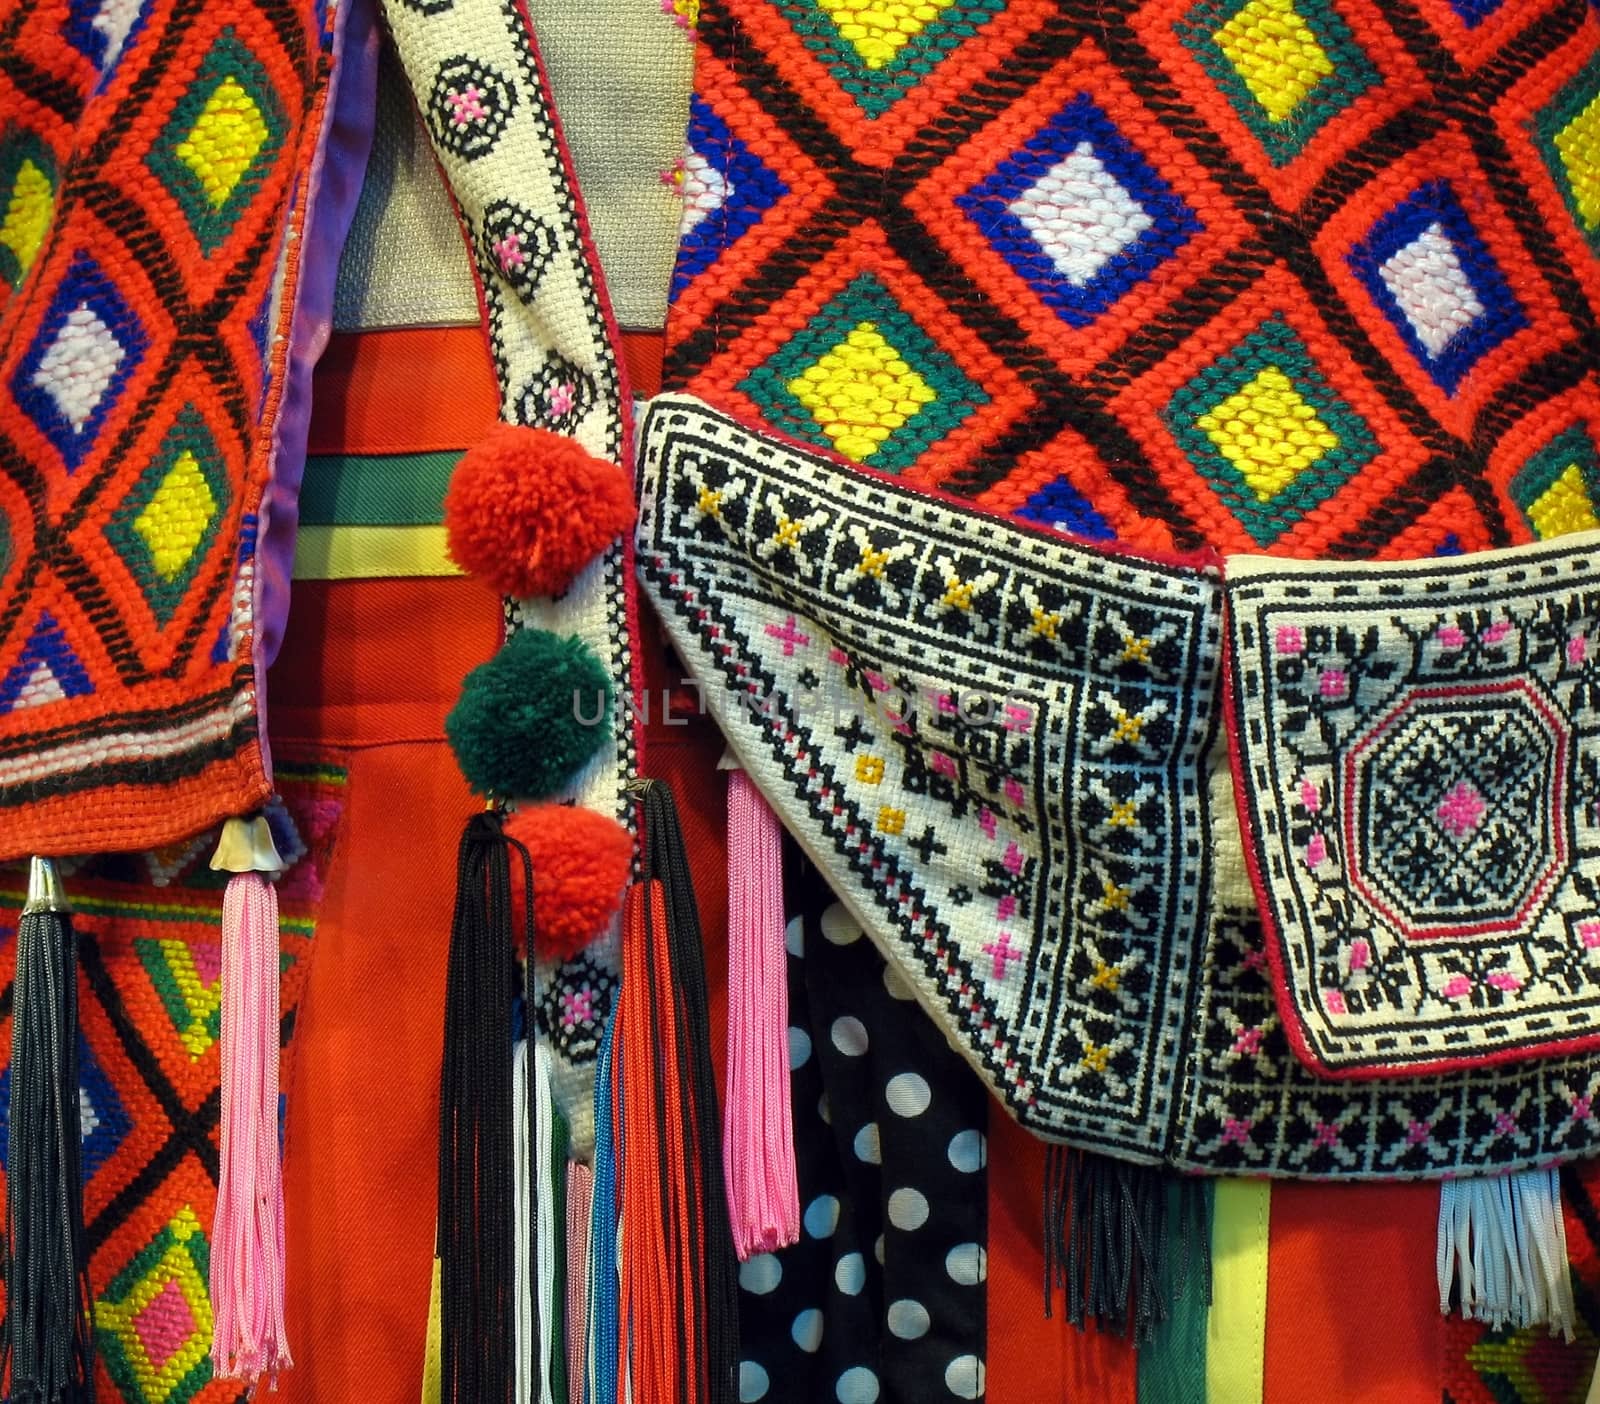 -- a closeup view of a Taiwanese aboriginal dress
